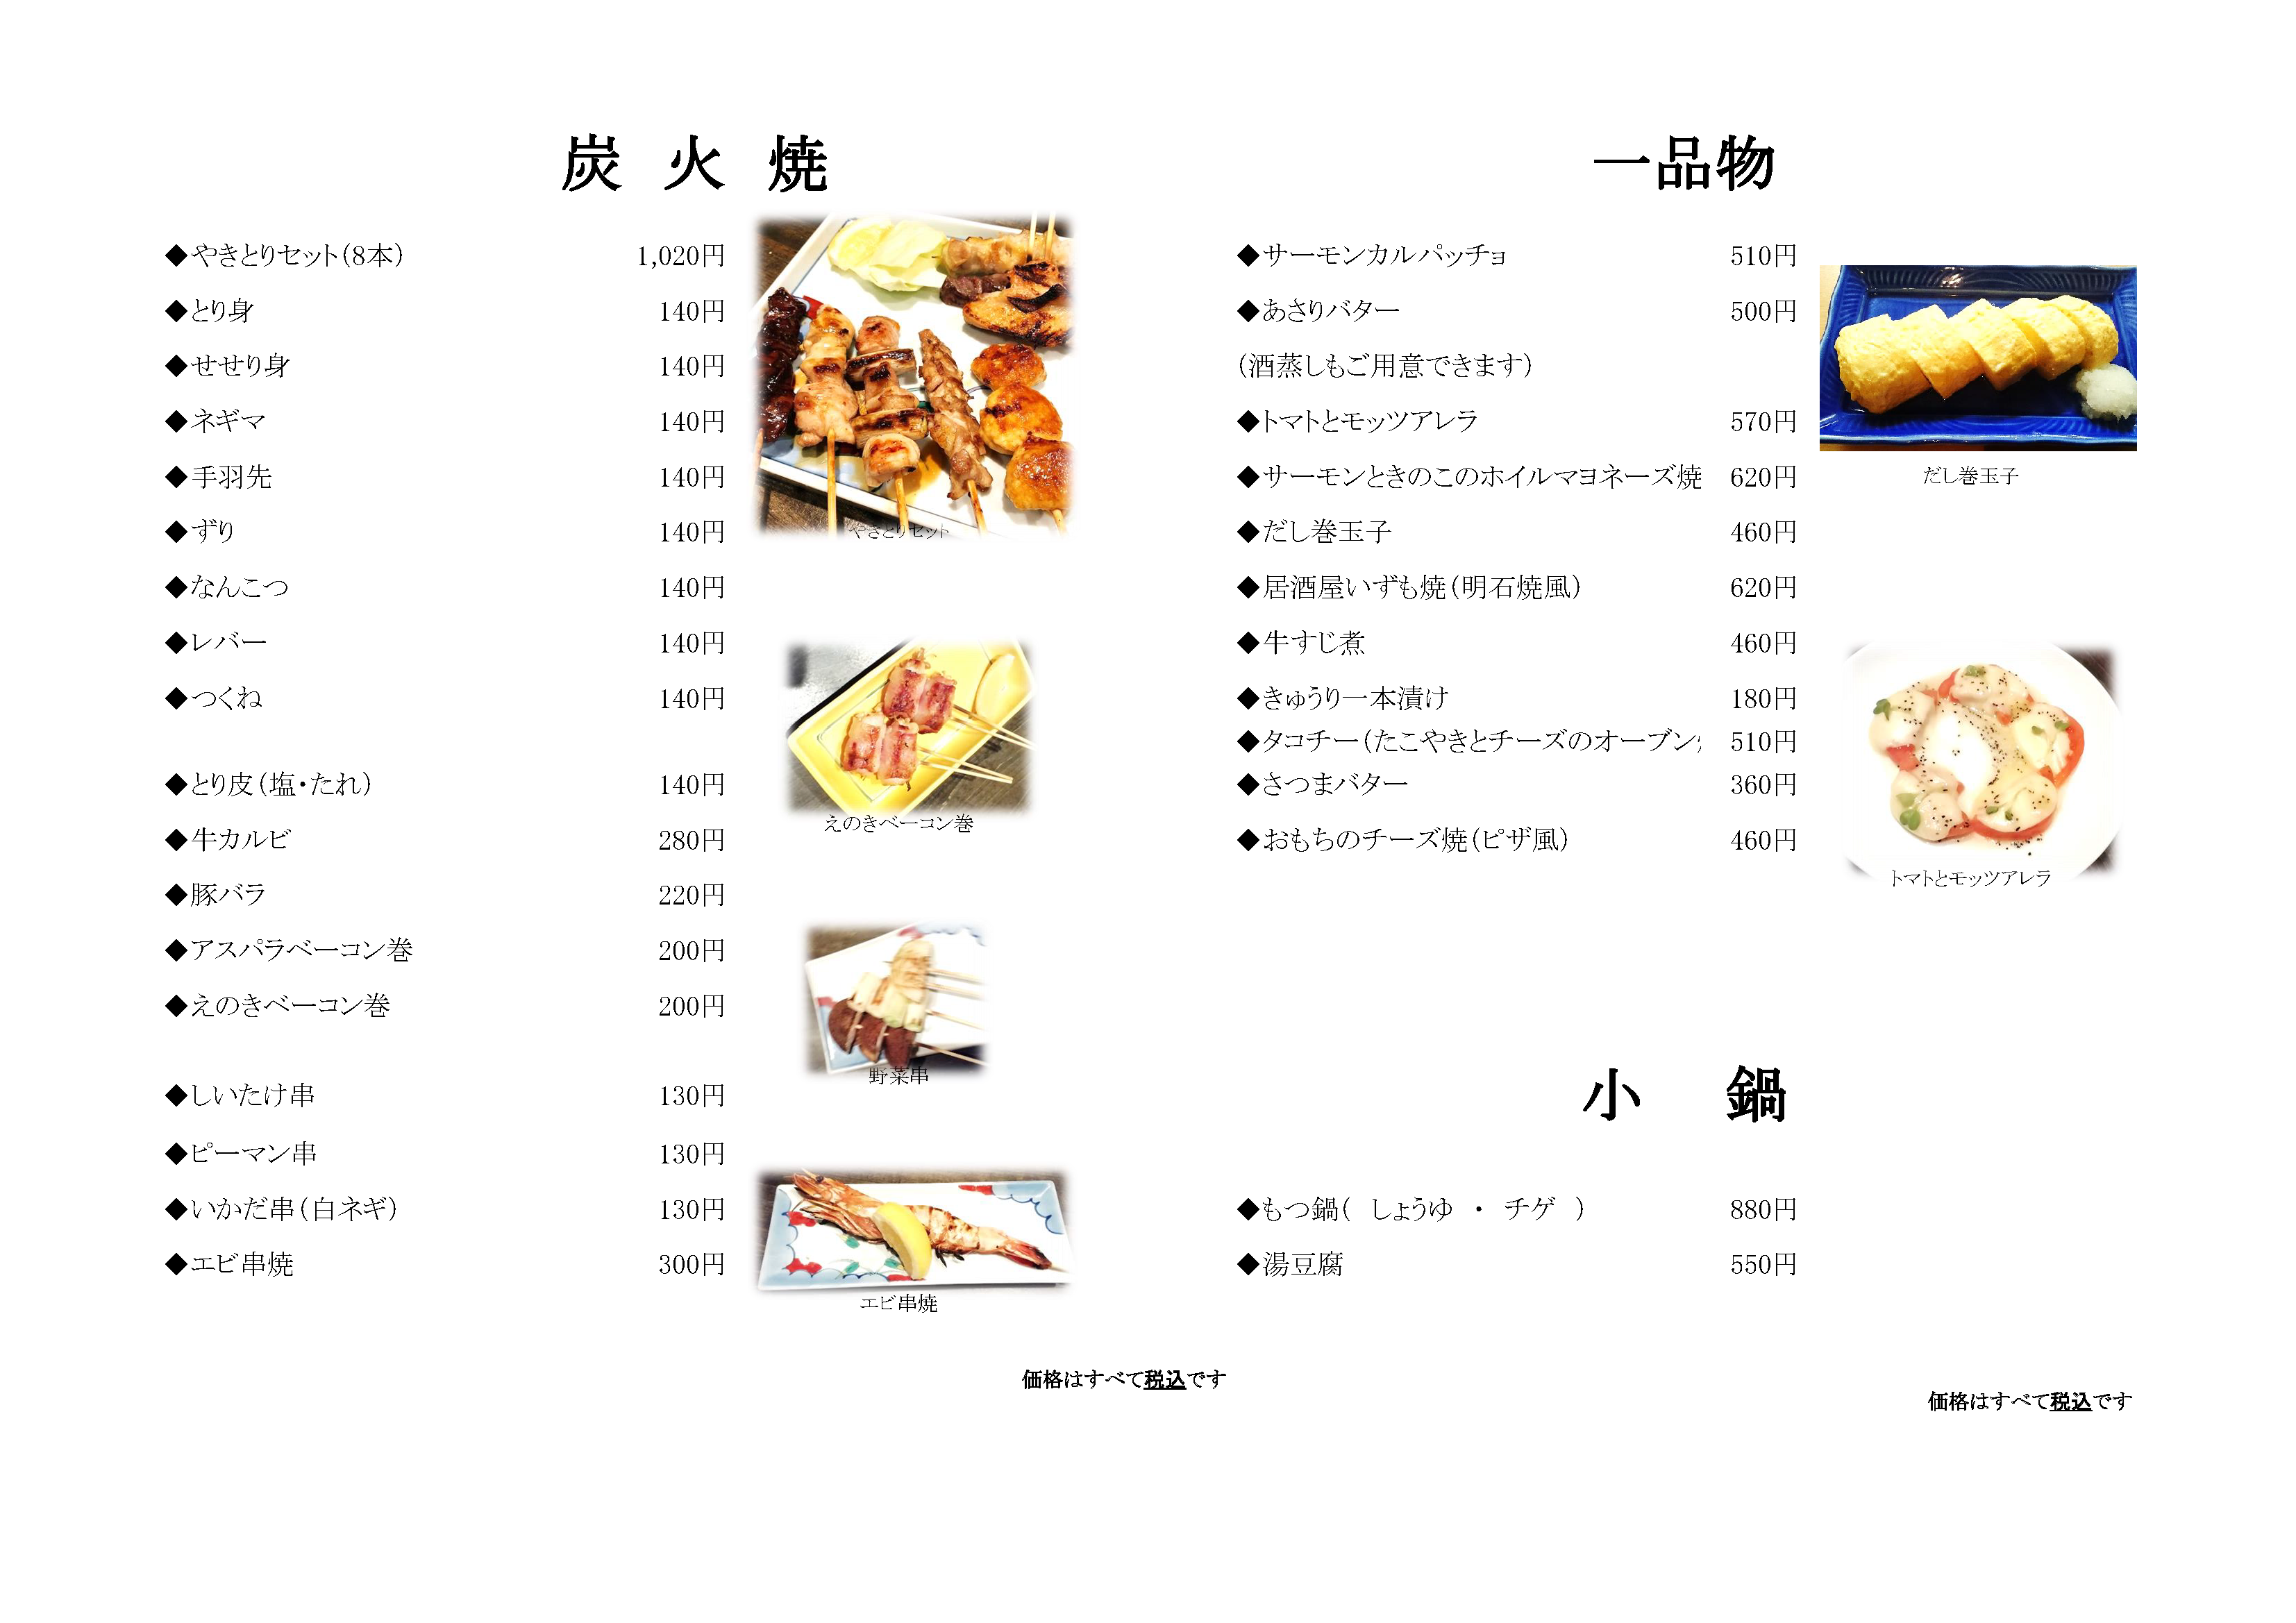 izumo-food-menu-2